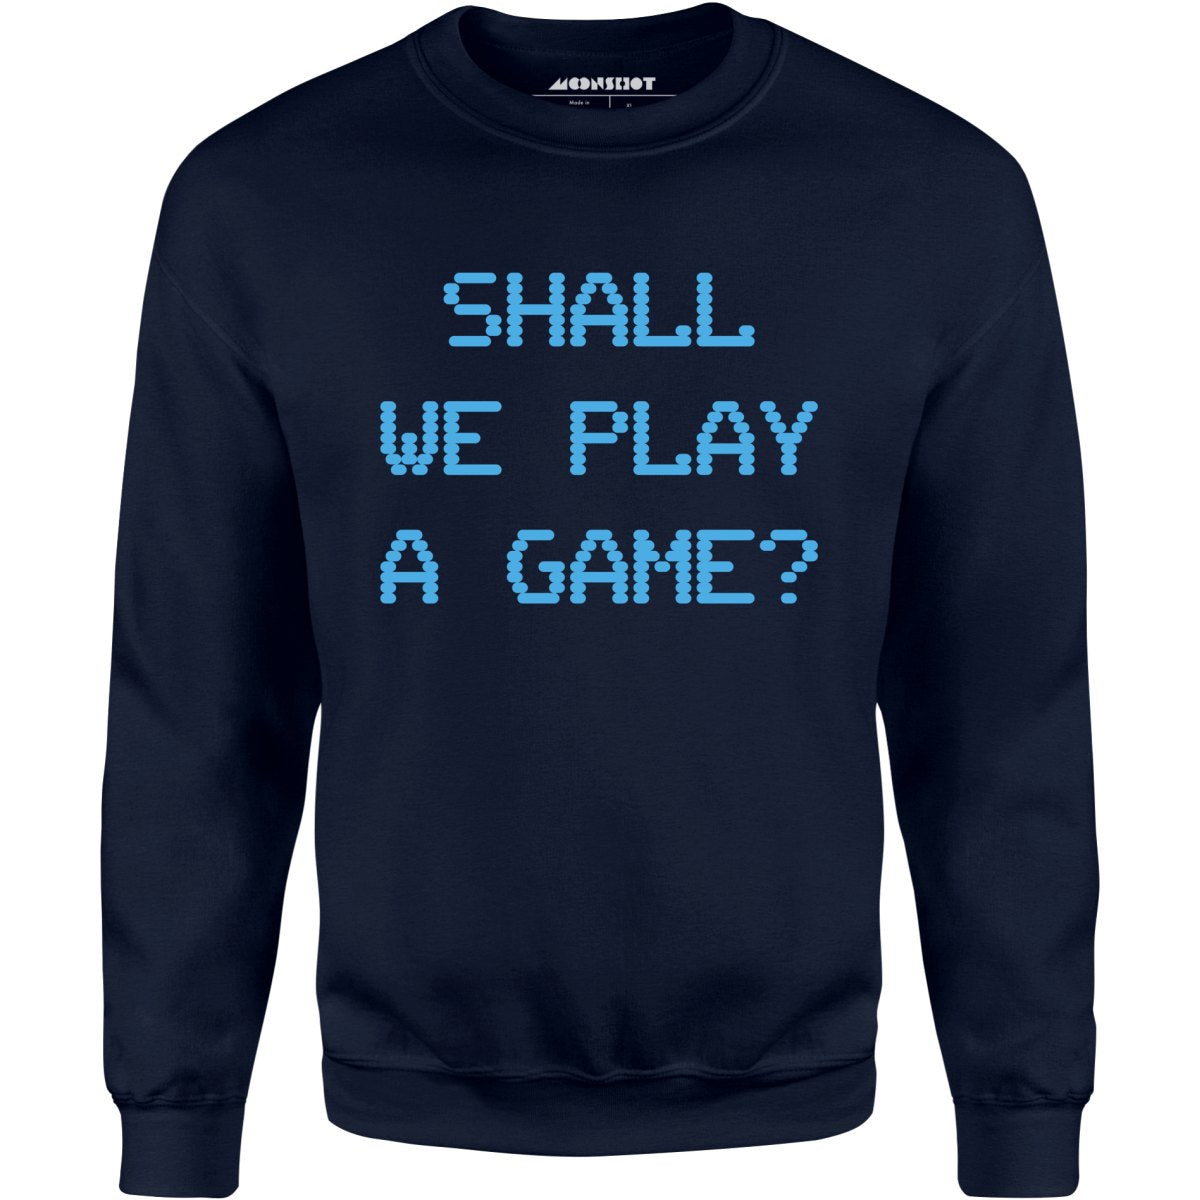 Shall We Play a Game? - Unisex Sweatshirt